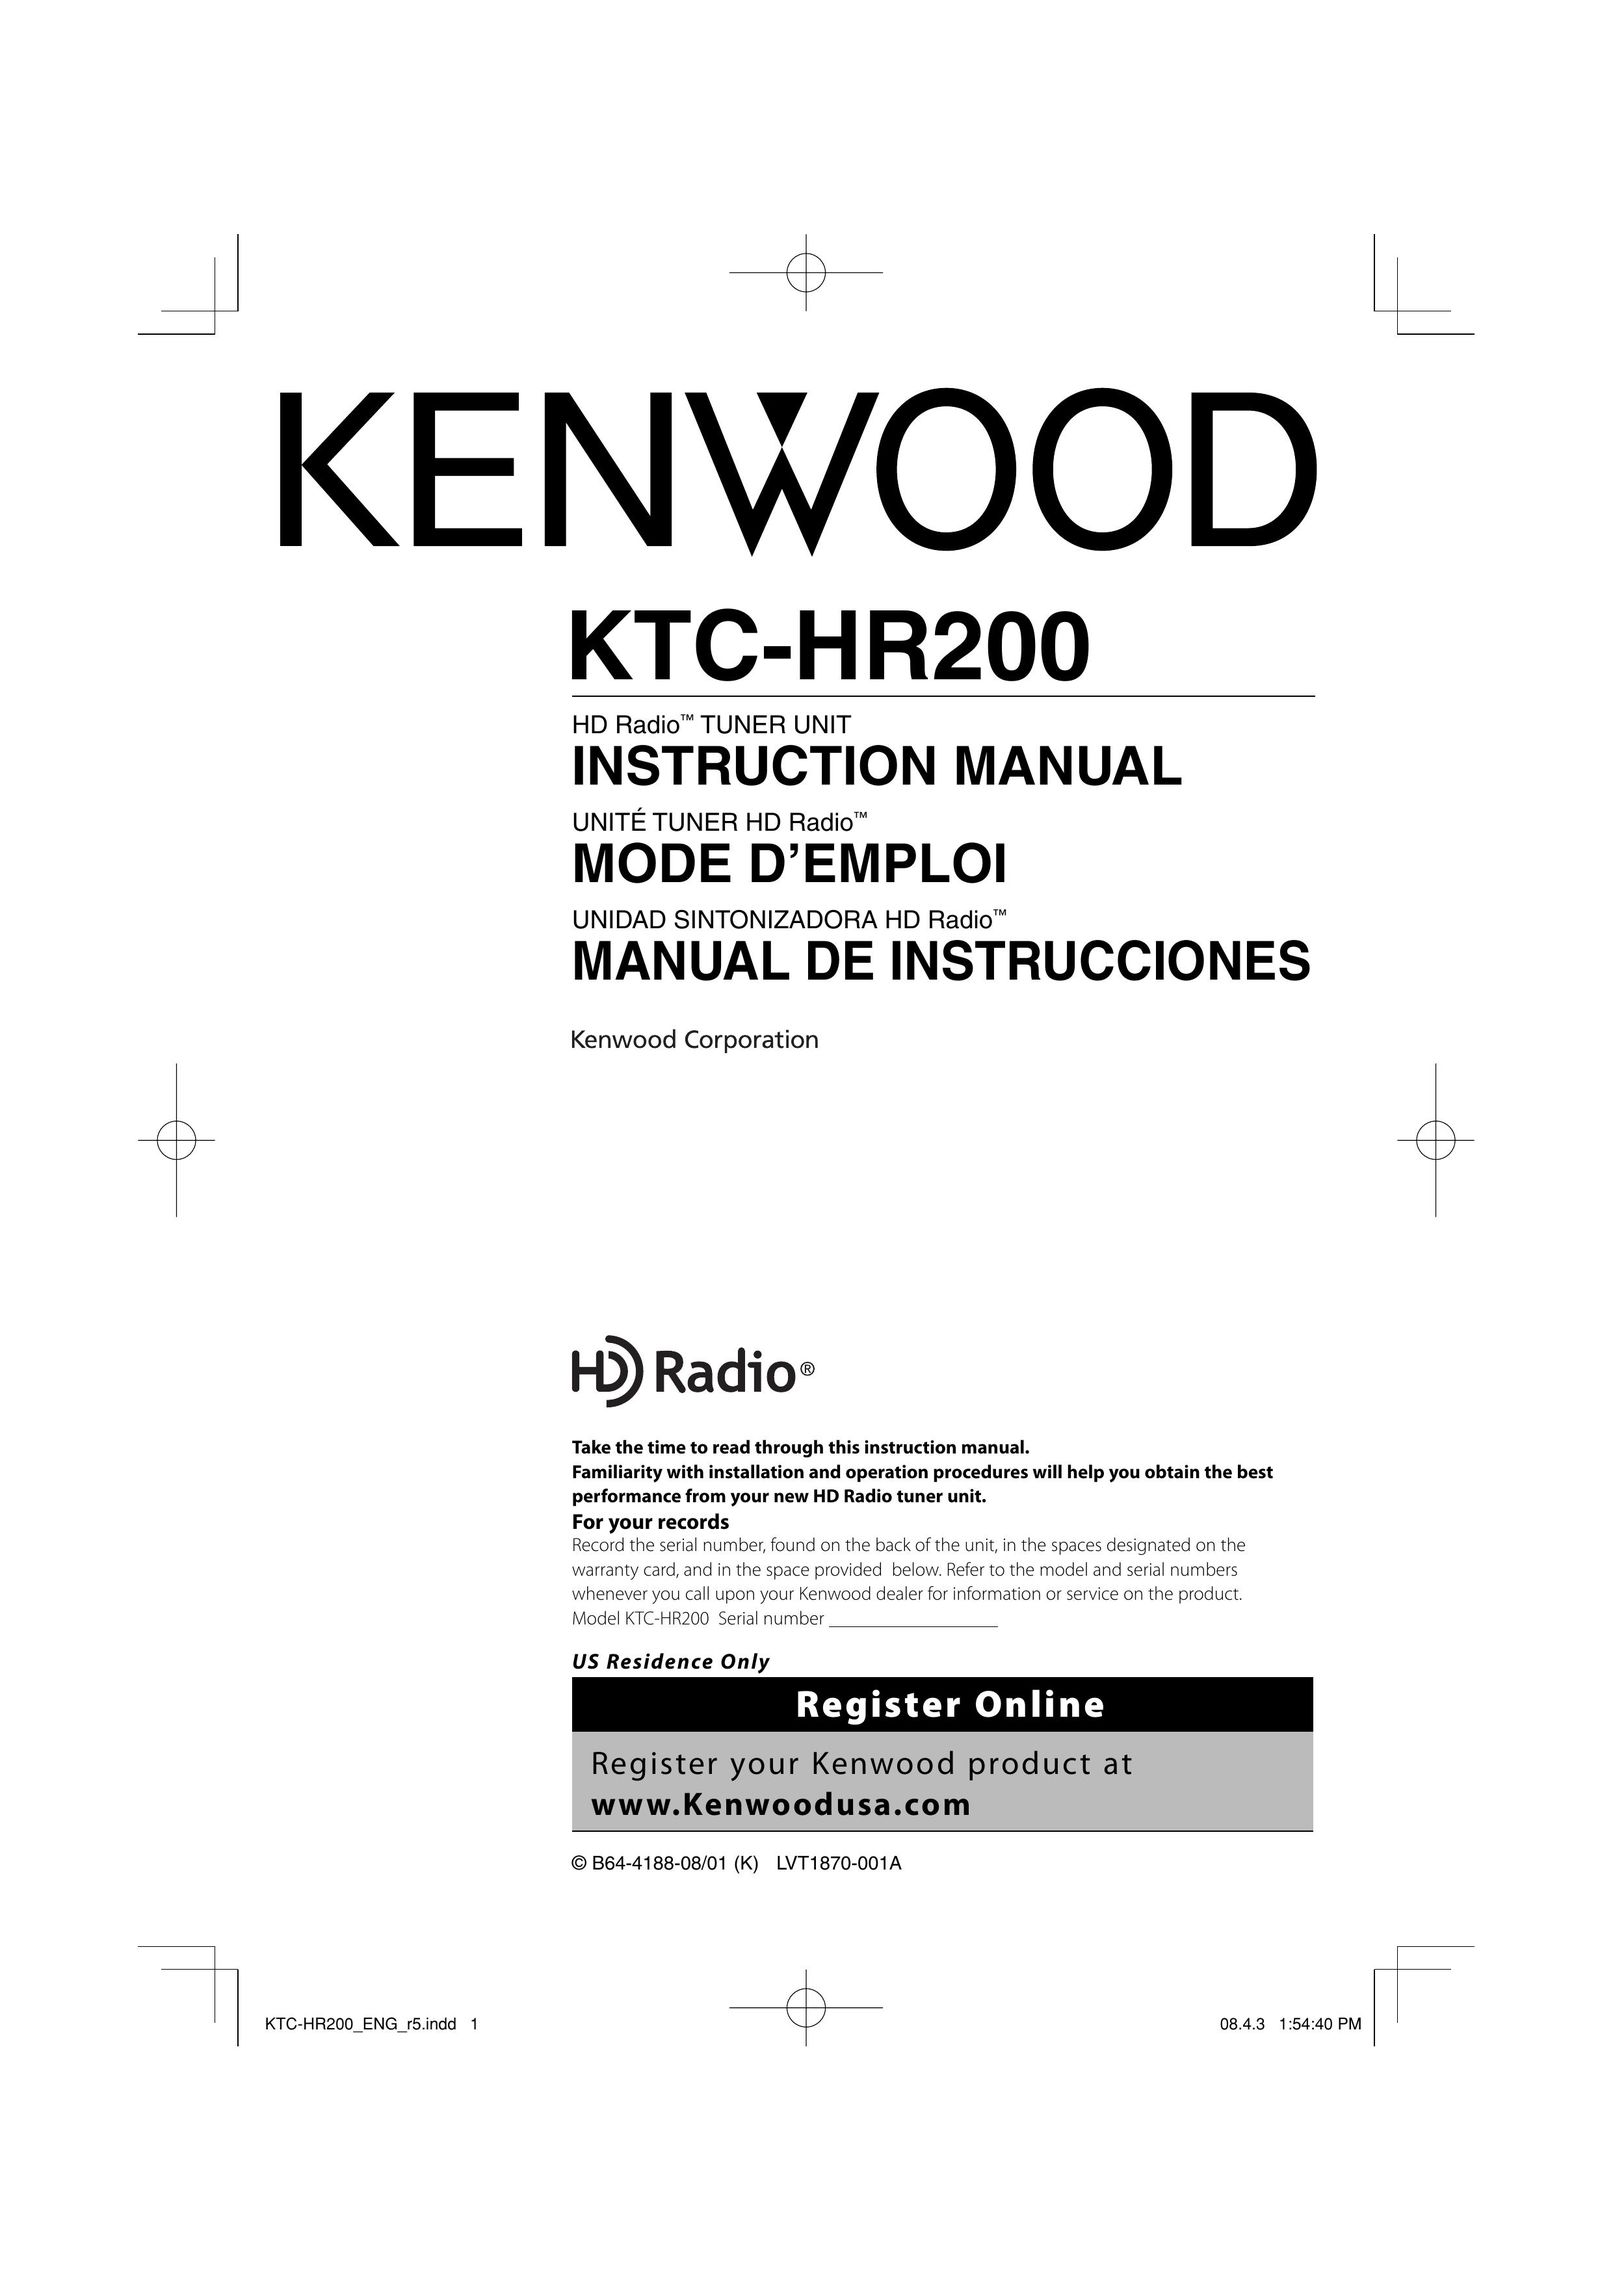 Kenwood KTC-HR200 Switch User Manual